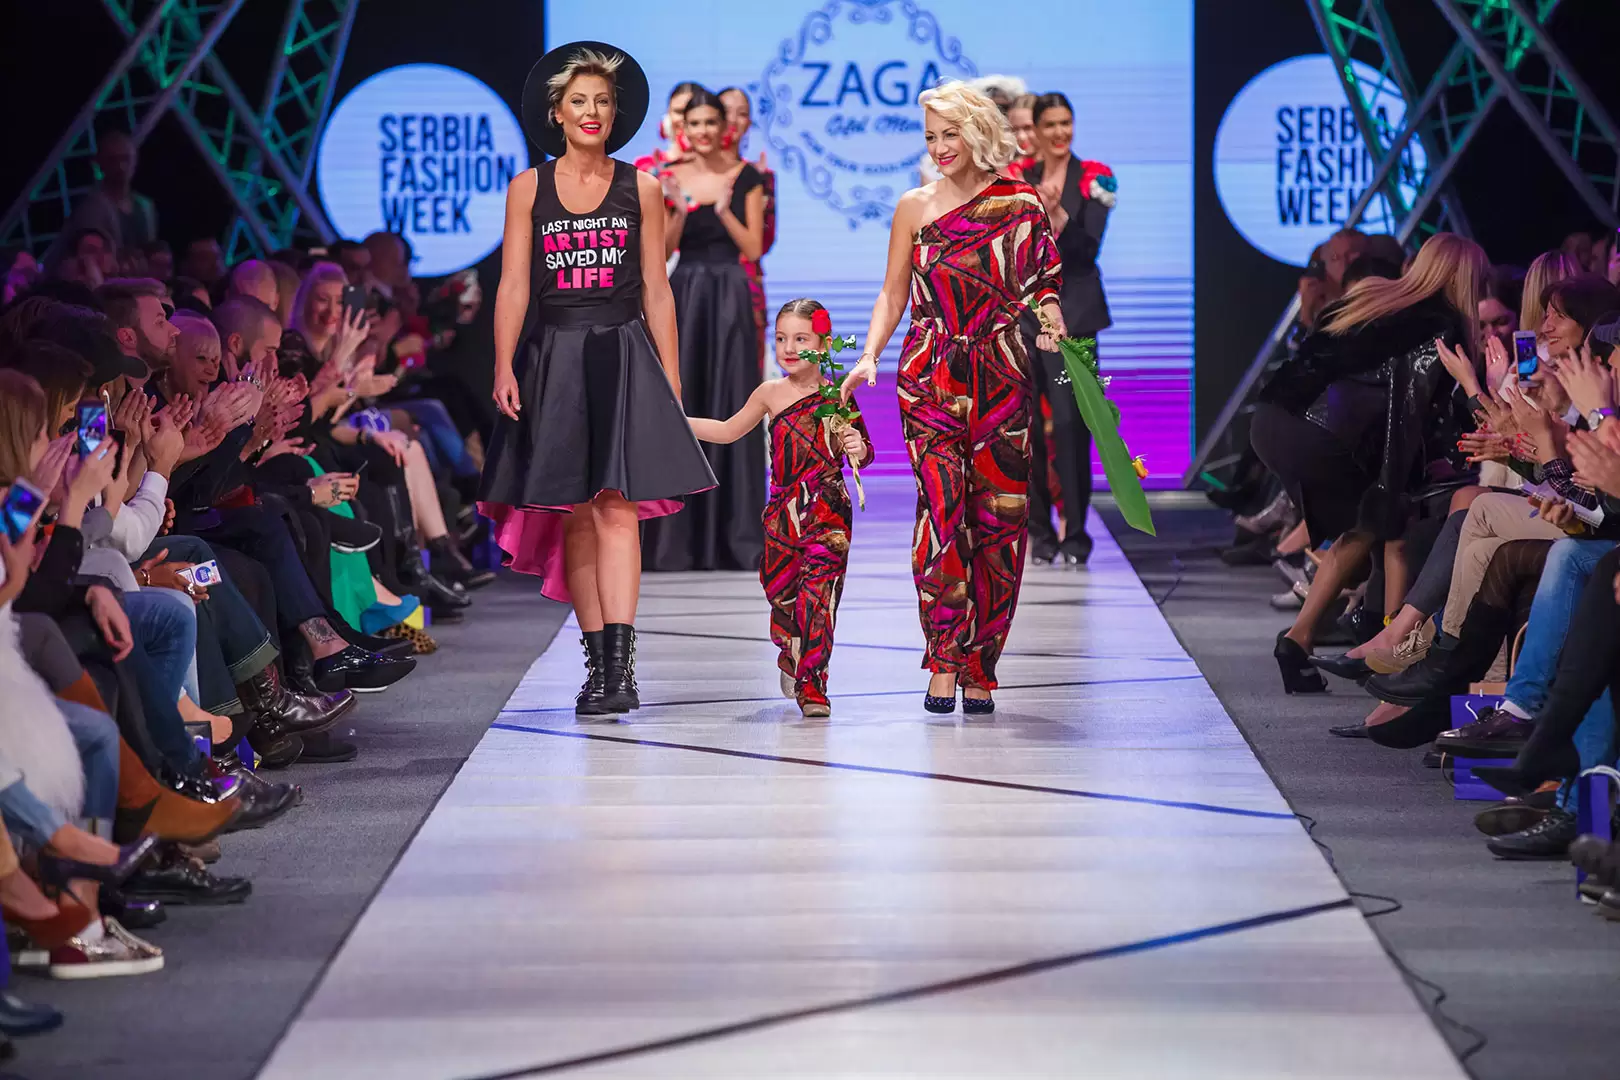 Serbia Fashion Week Zaga Kal Mar